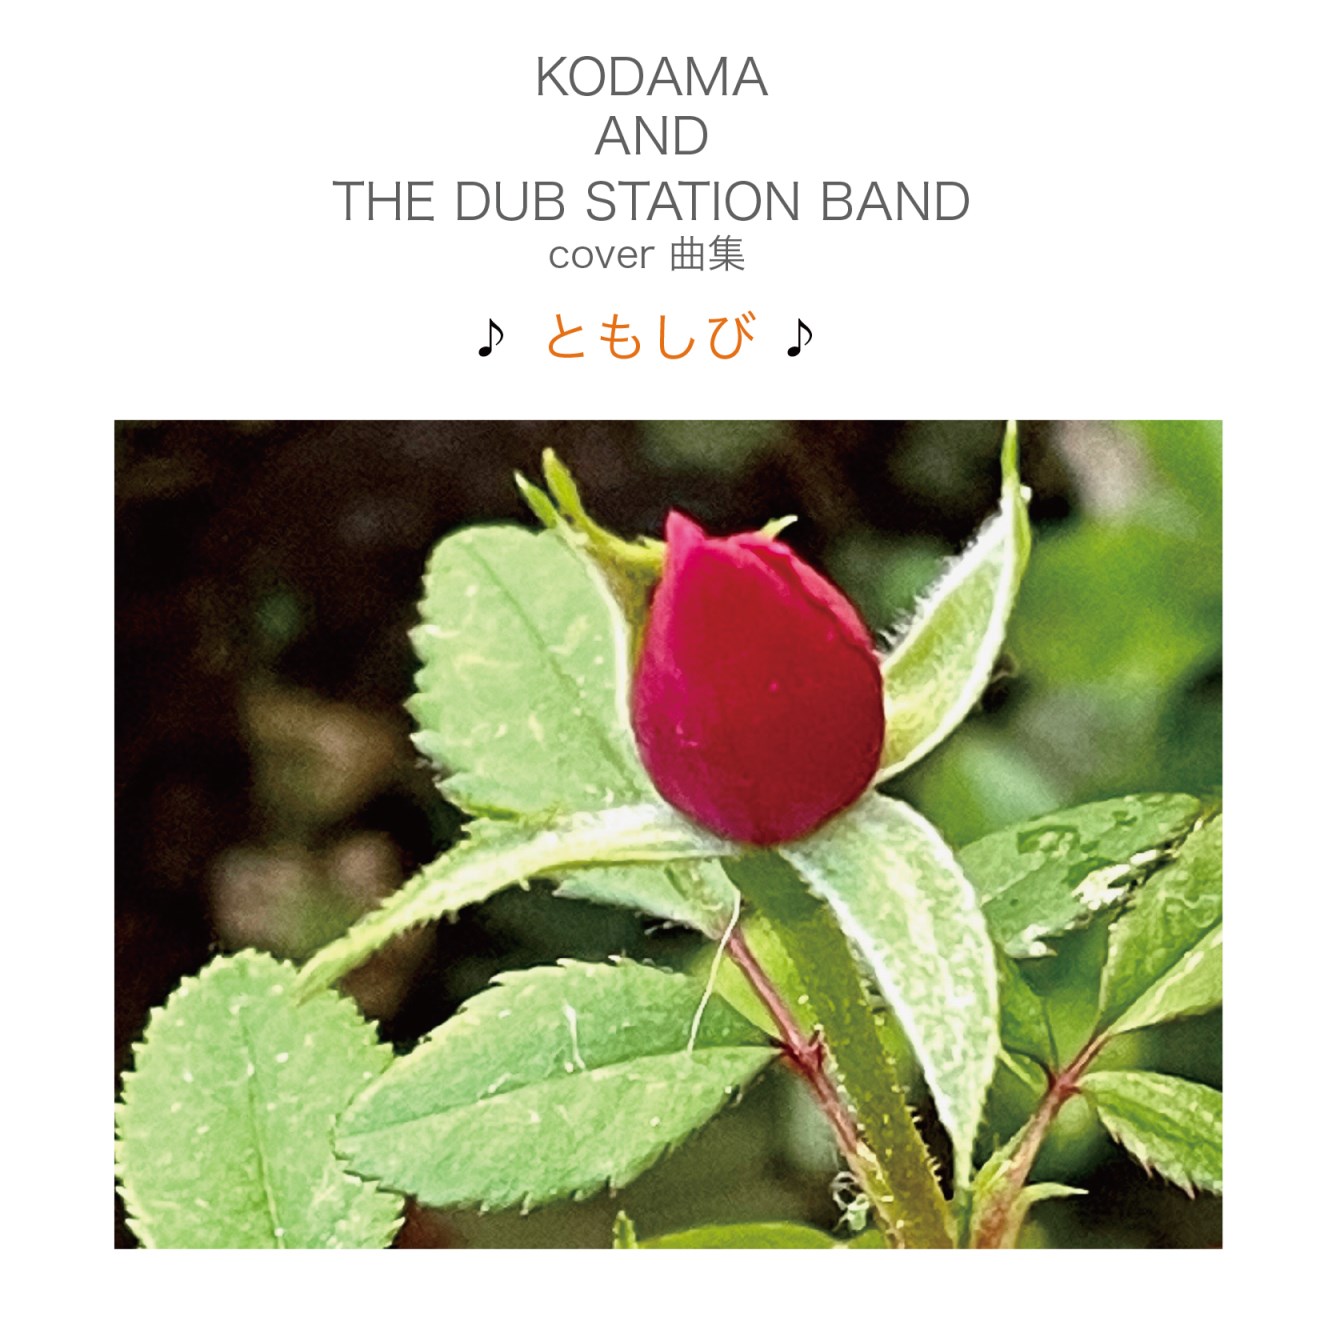 KODAMA AND THE DUB STATION BAND